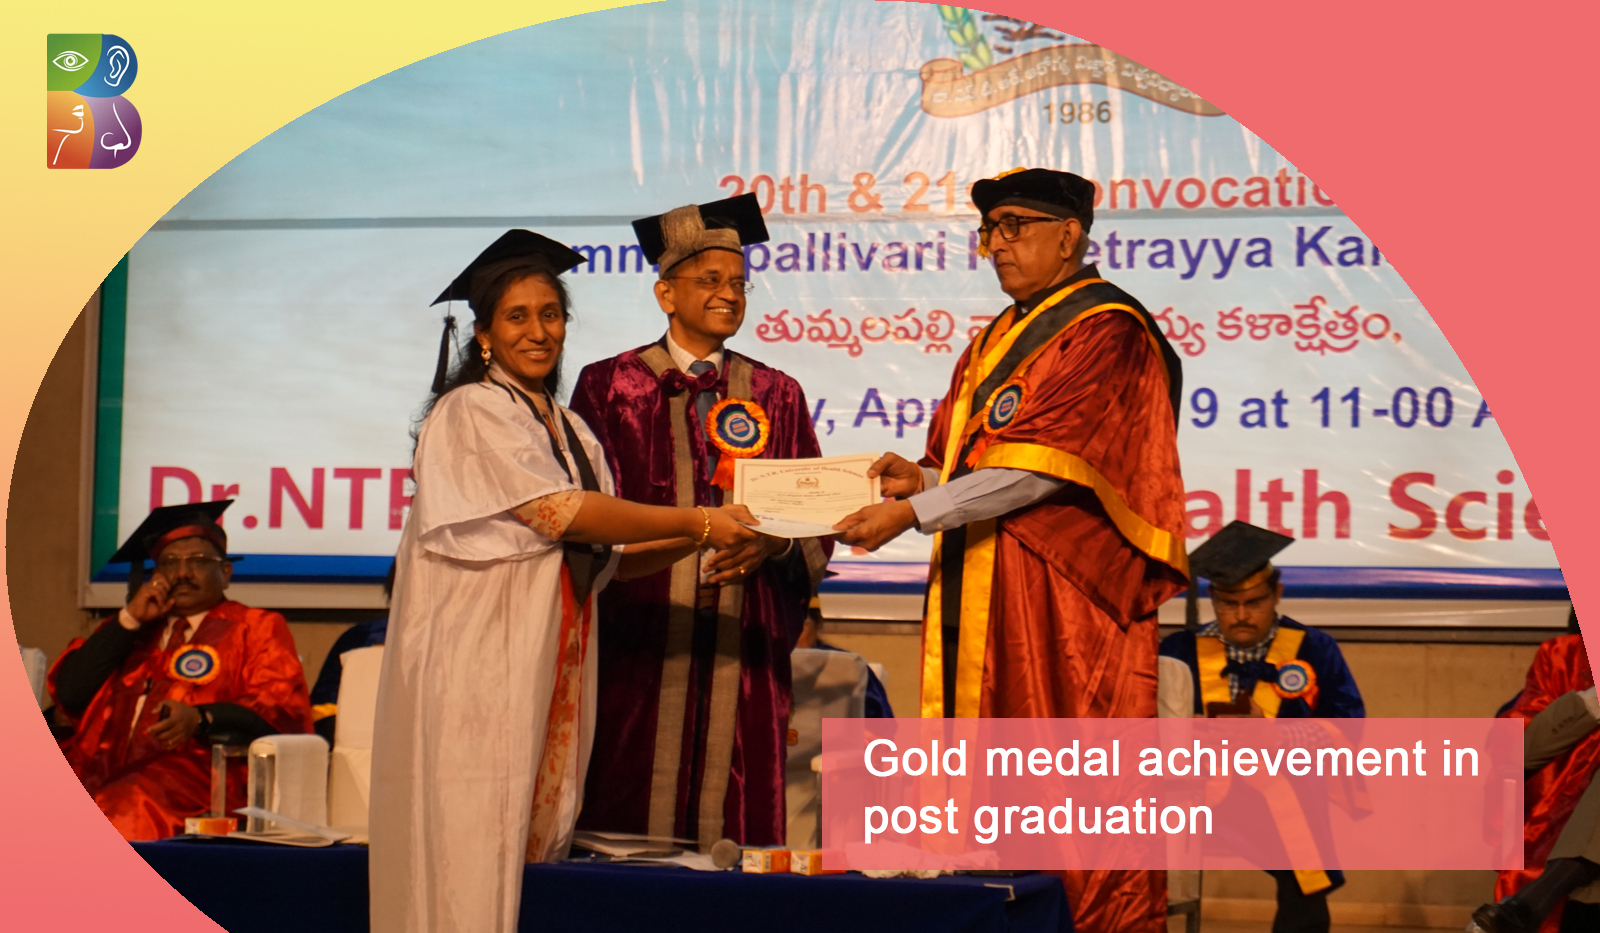 gold medal achievement in post graduation